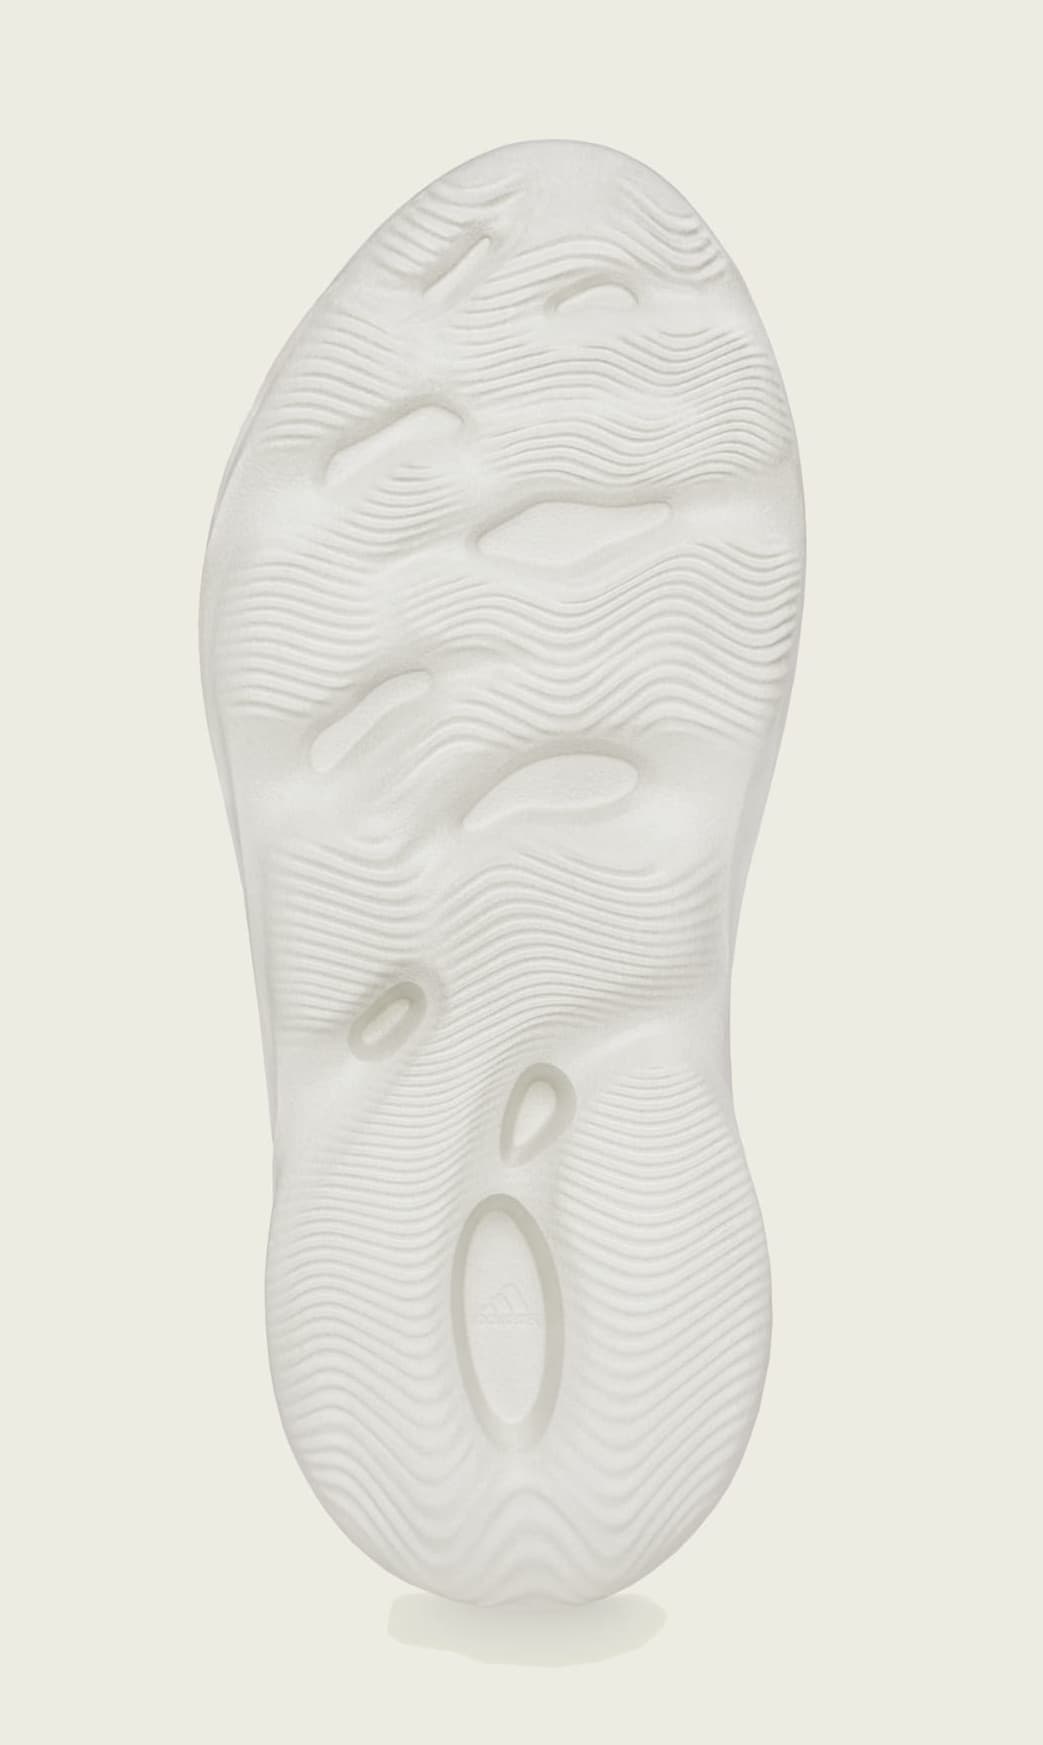 Adidas Yeezy Foam Runner 'Sand' FY4567 Outsole